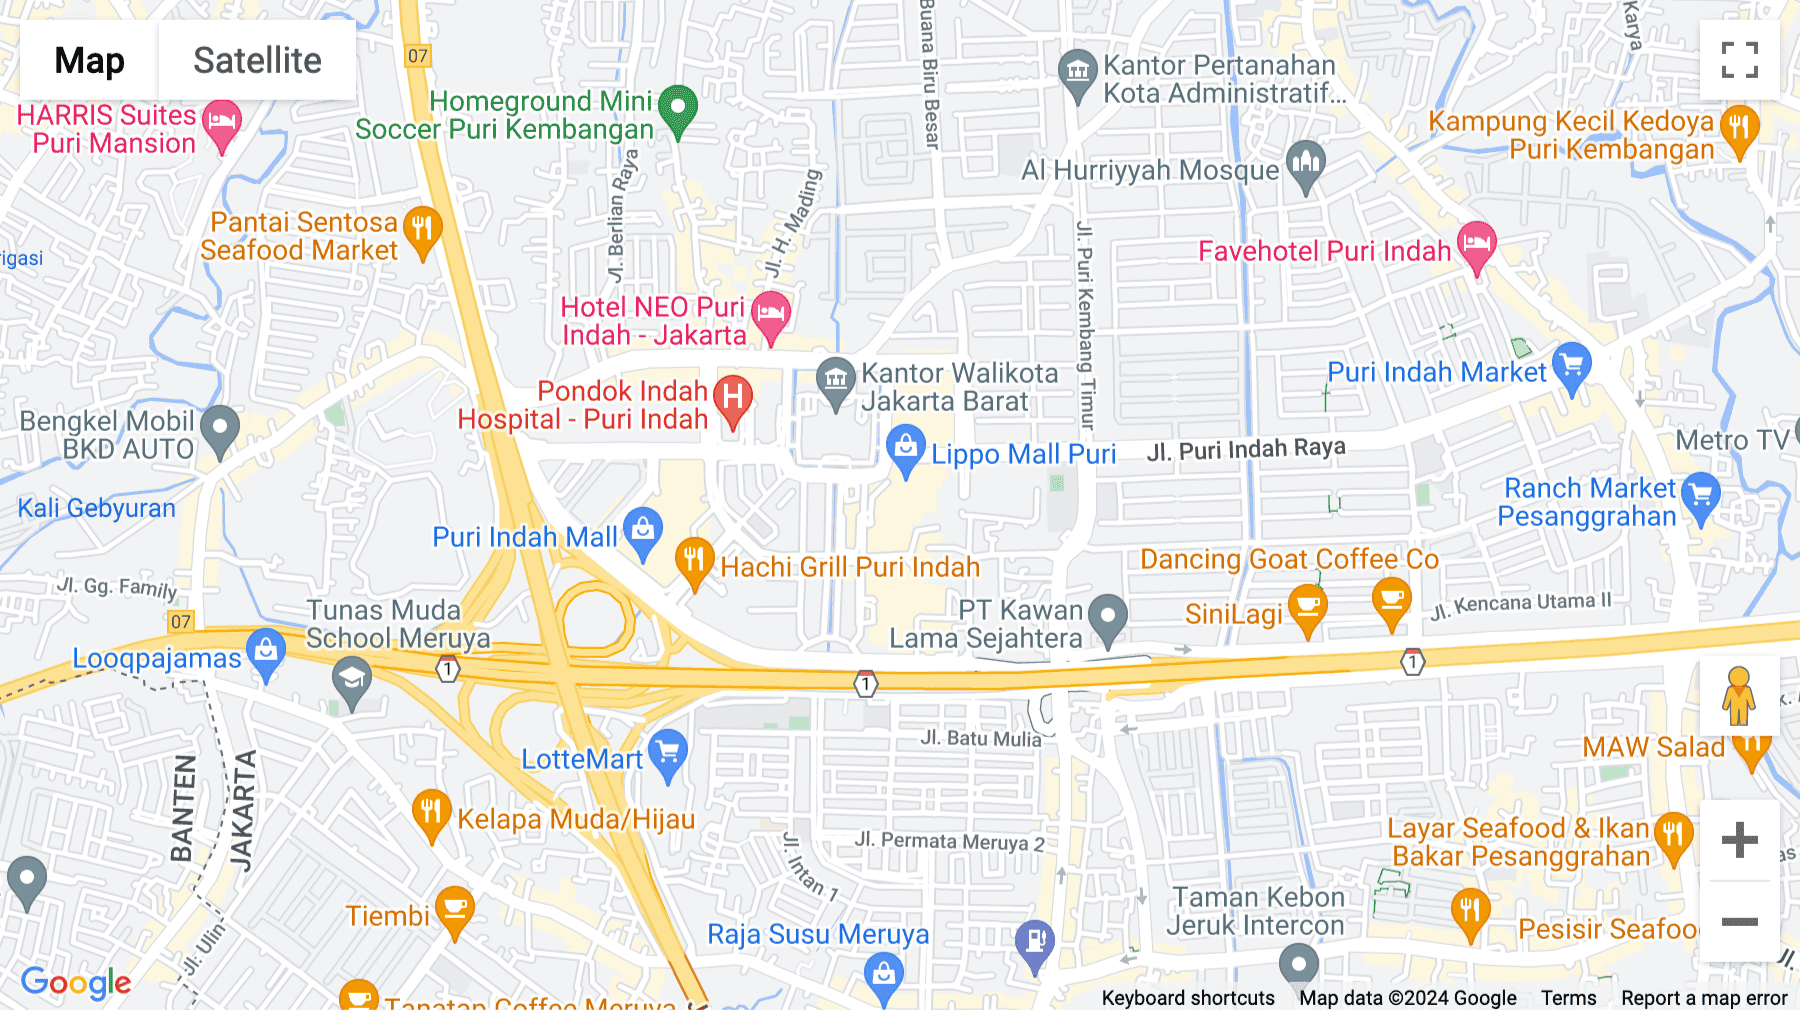 Click for interative map of Lippo Mall Puri, Puri Indah CBD, Jl. Puri Indah Raya, Kembangan Selatan, Jakarta Barat, Jakarta